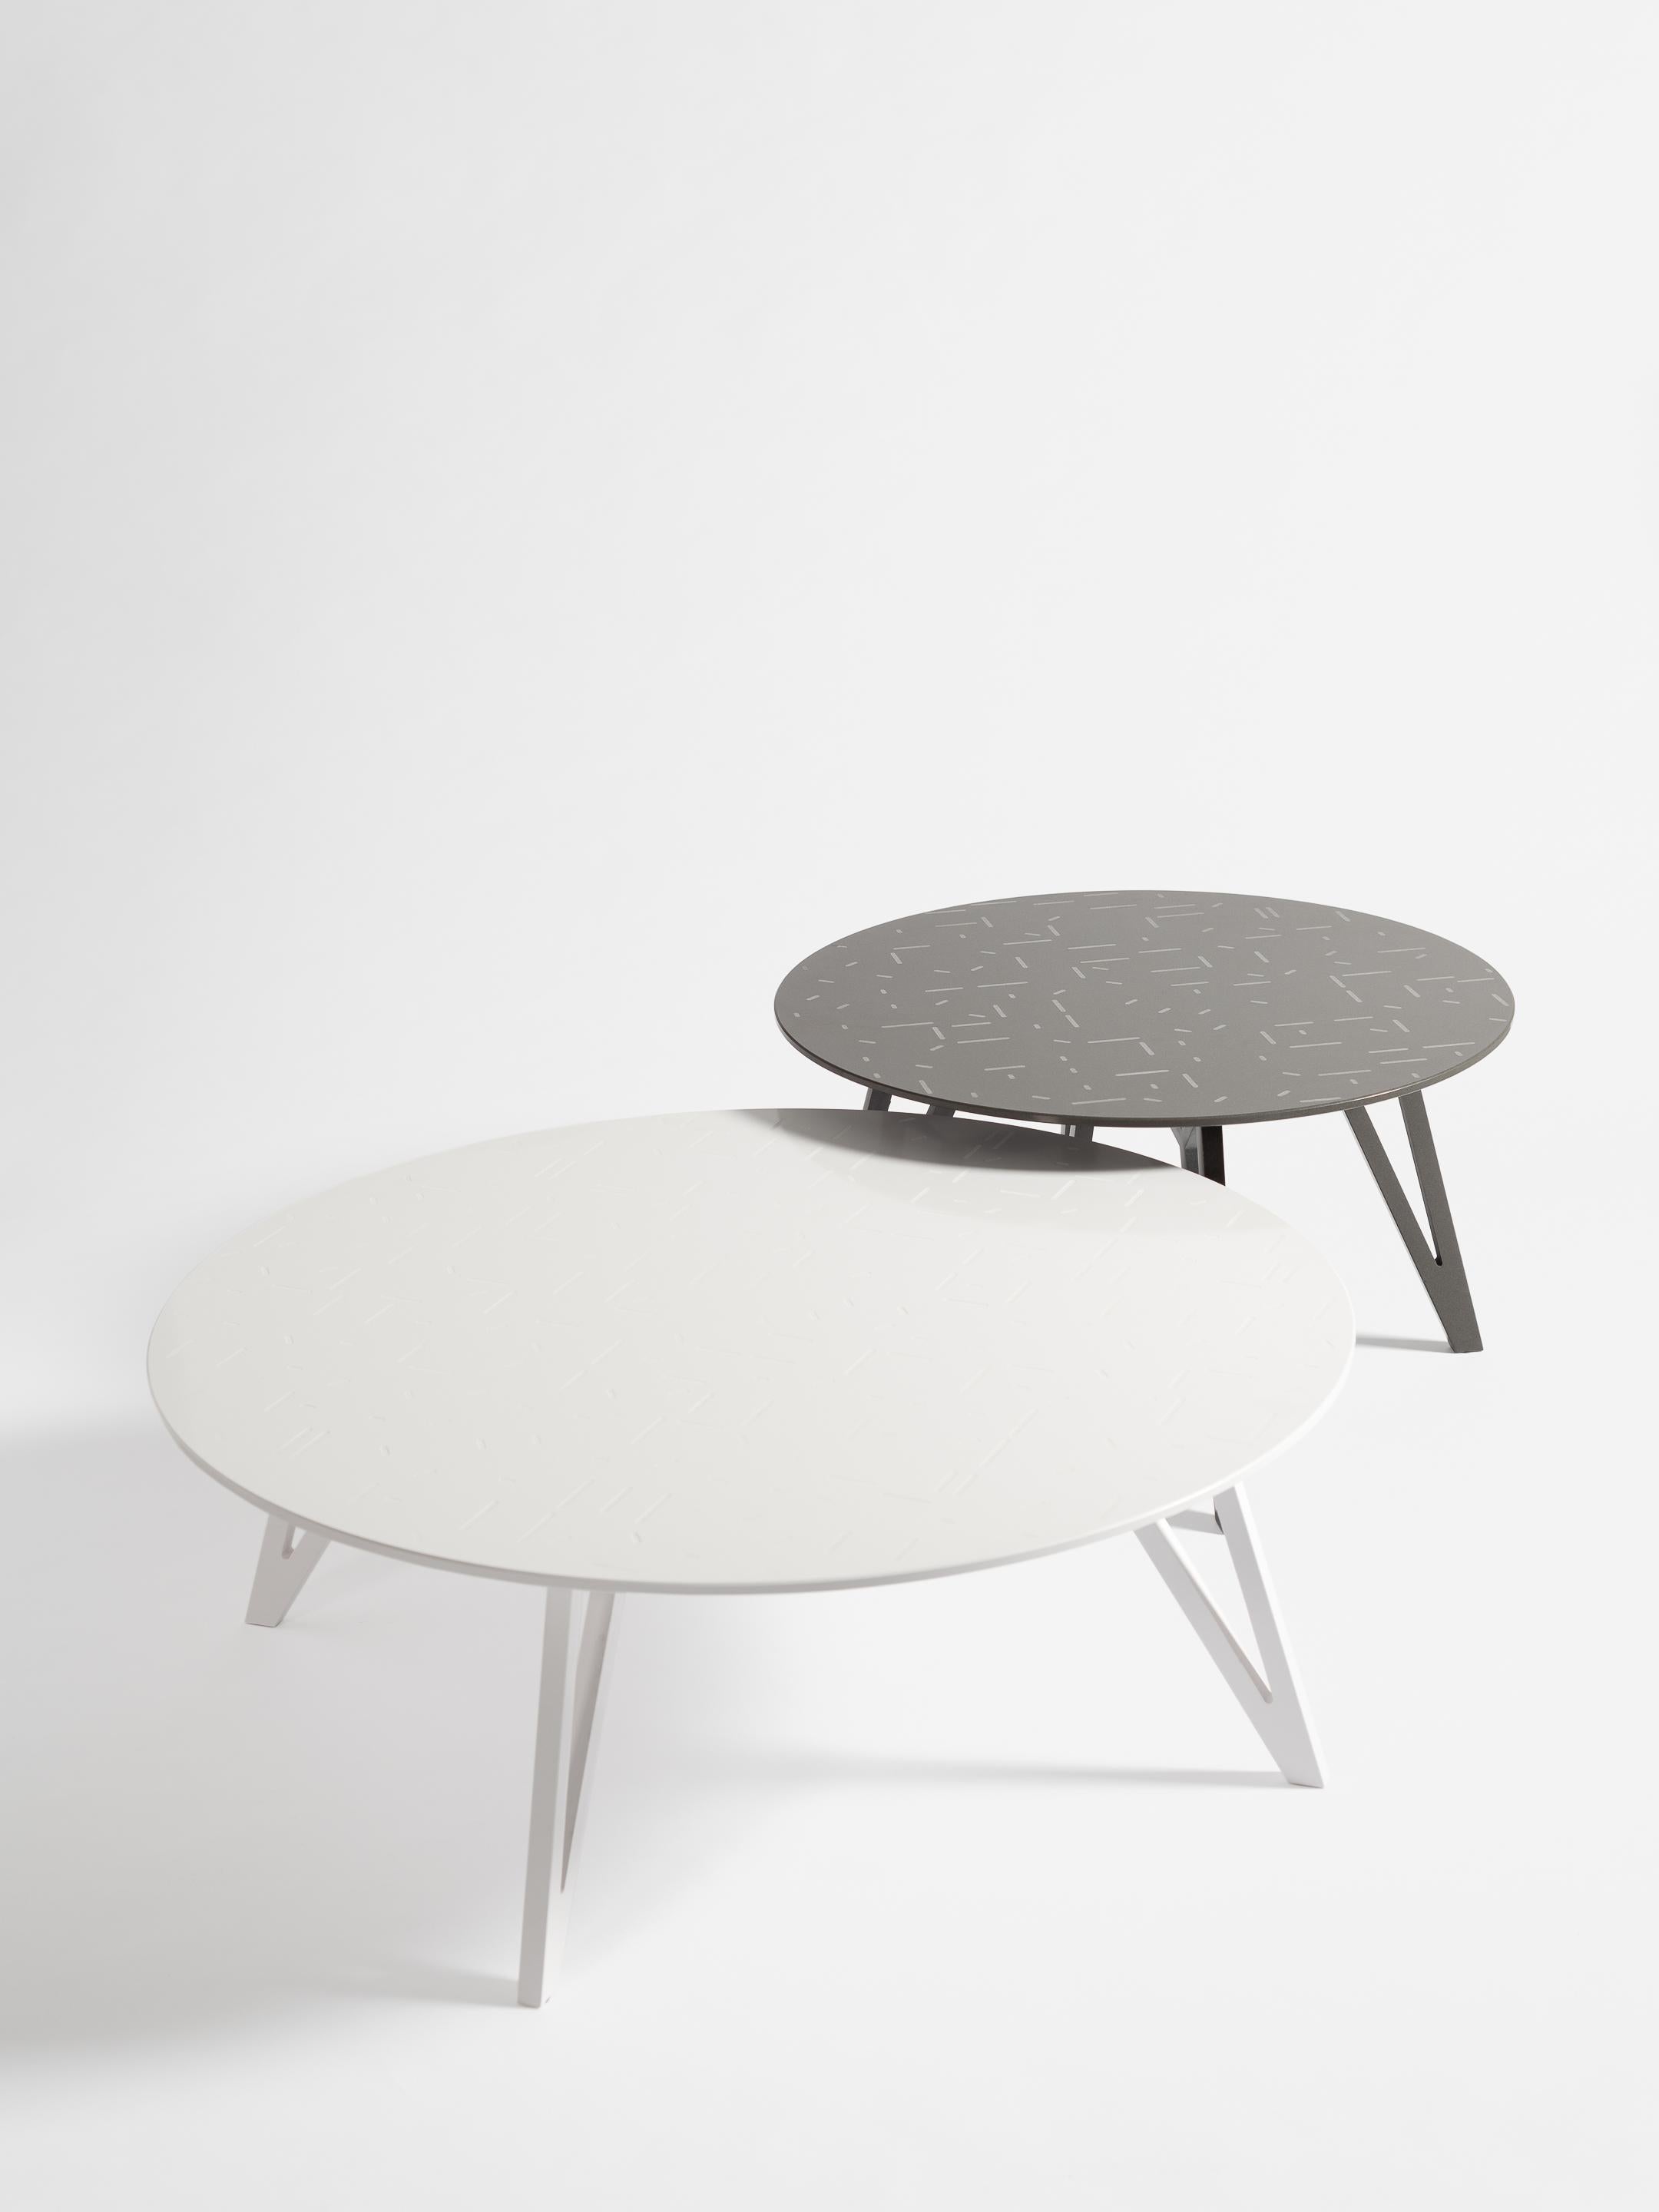 European 21st Century Modern Round Stone Composite Coffee Table in Graphite (Medium size) For Sale